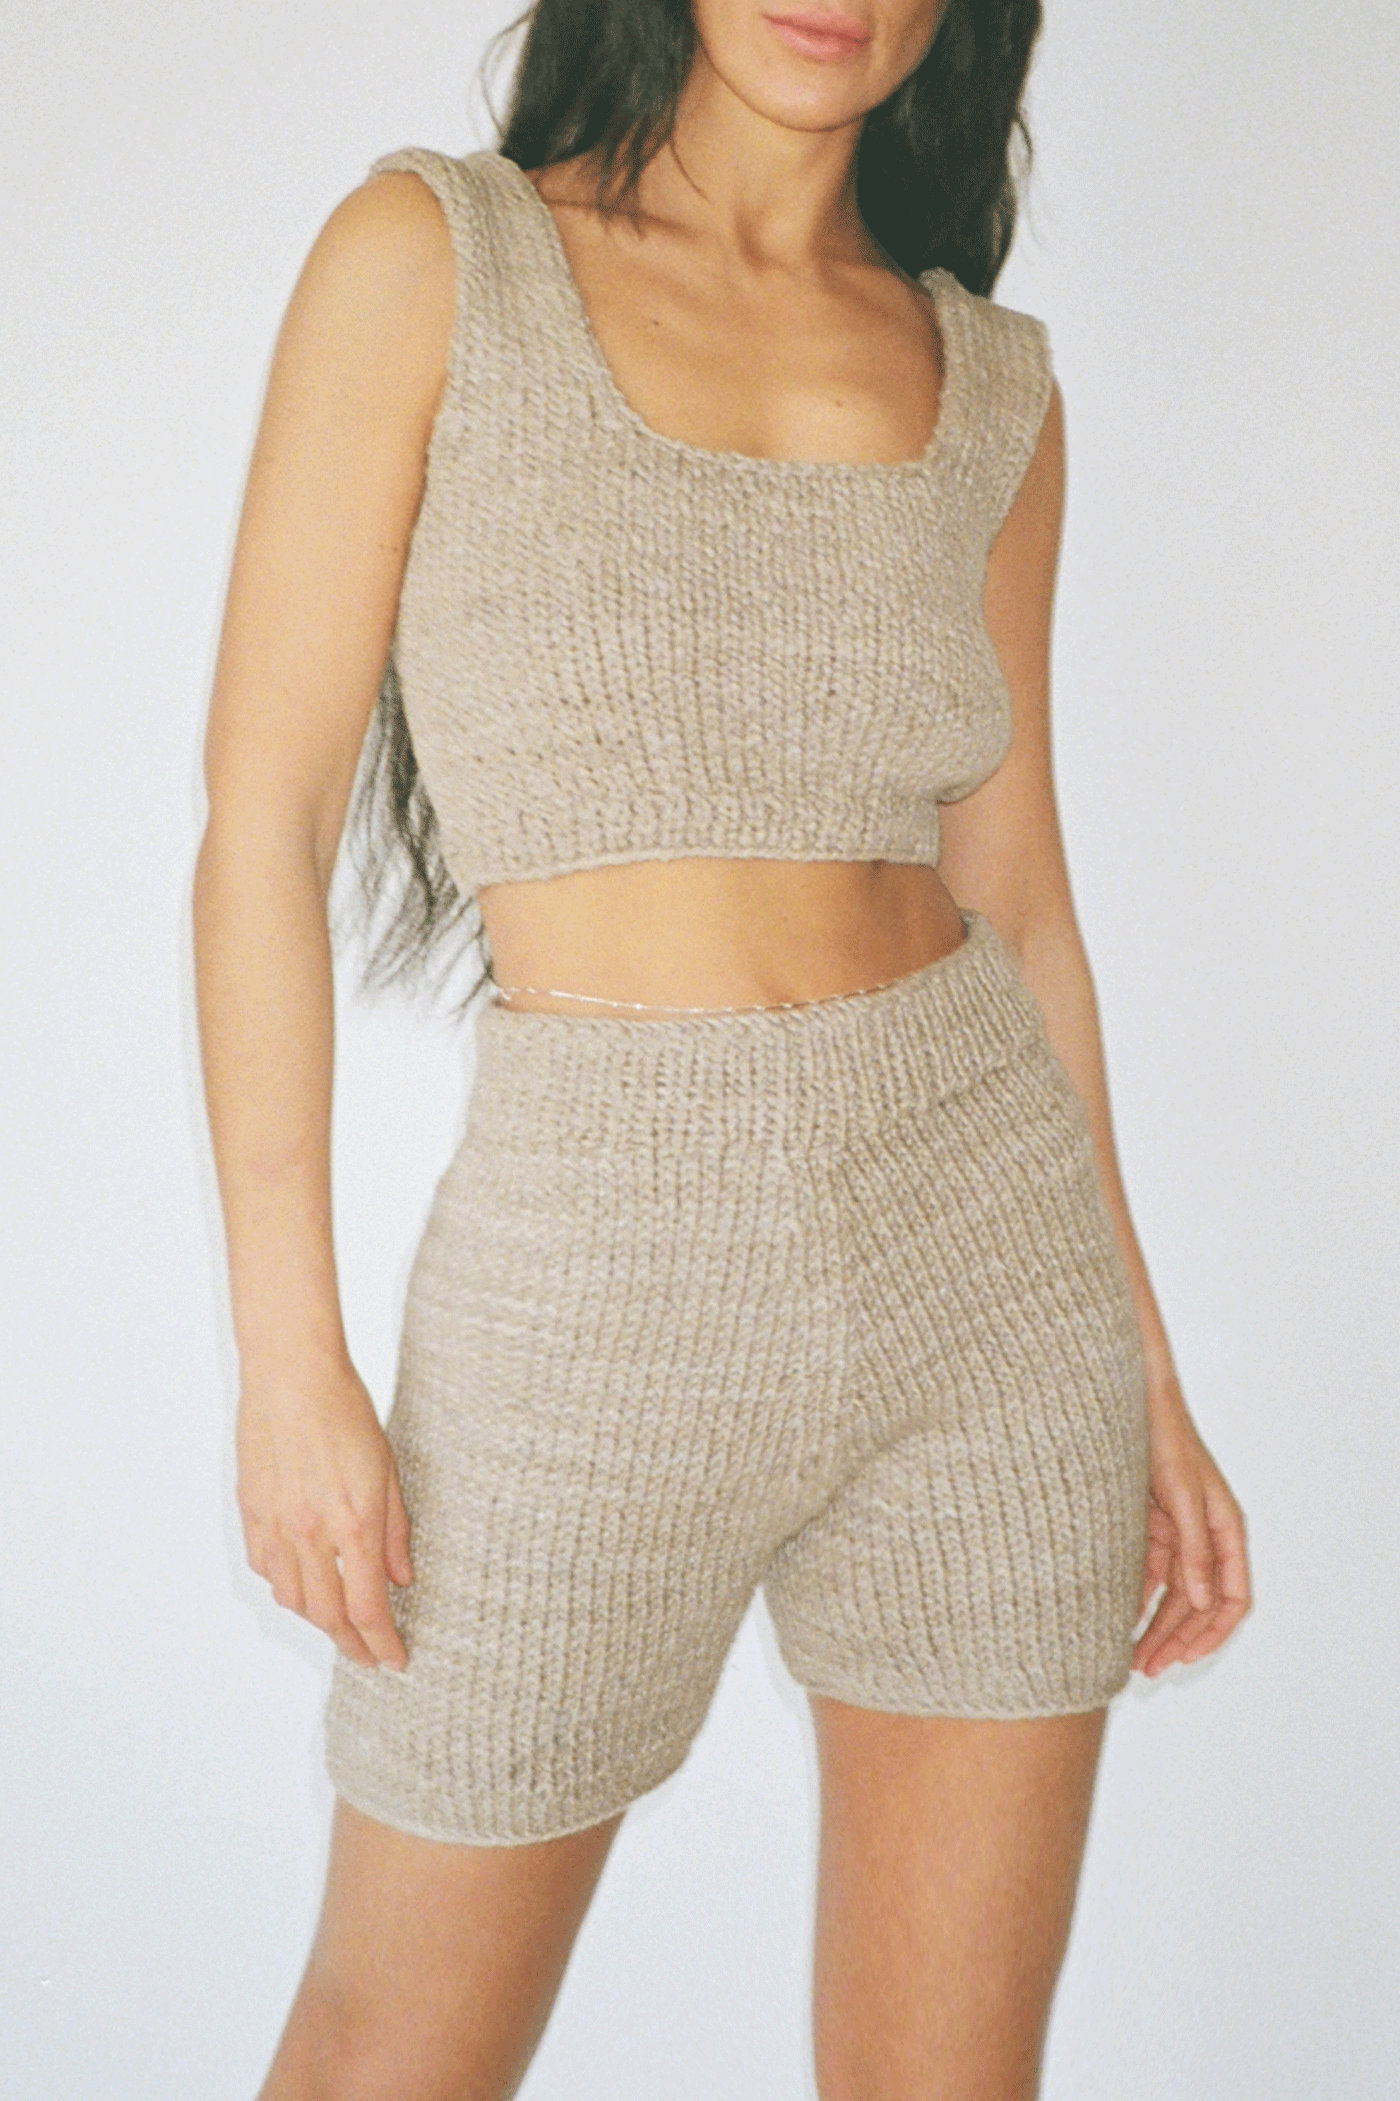 Sepia Handknit Shorts